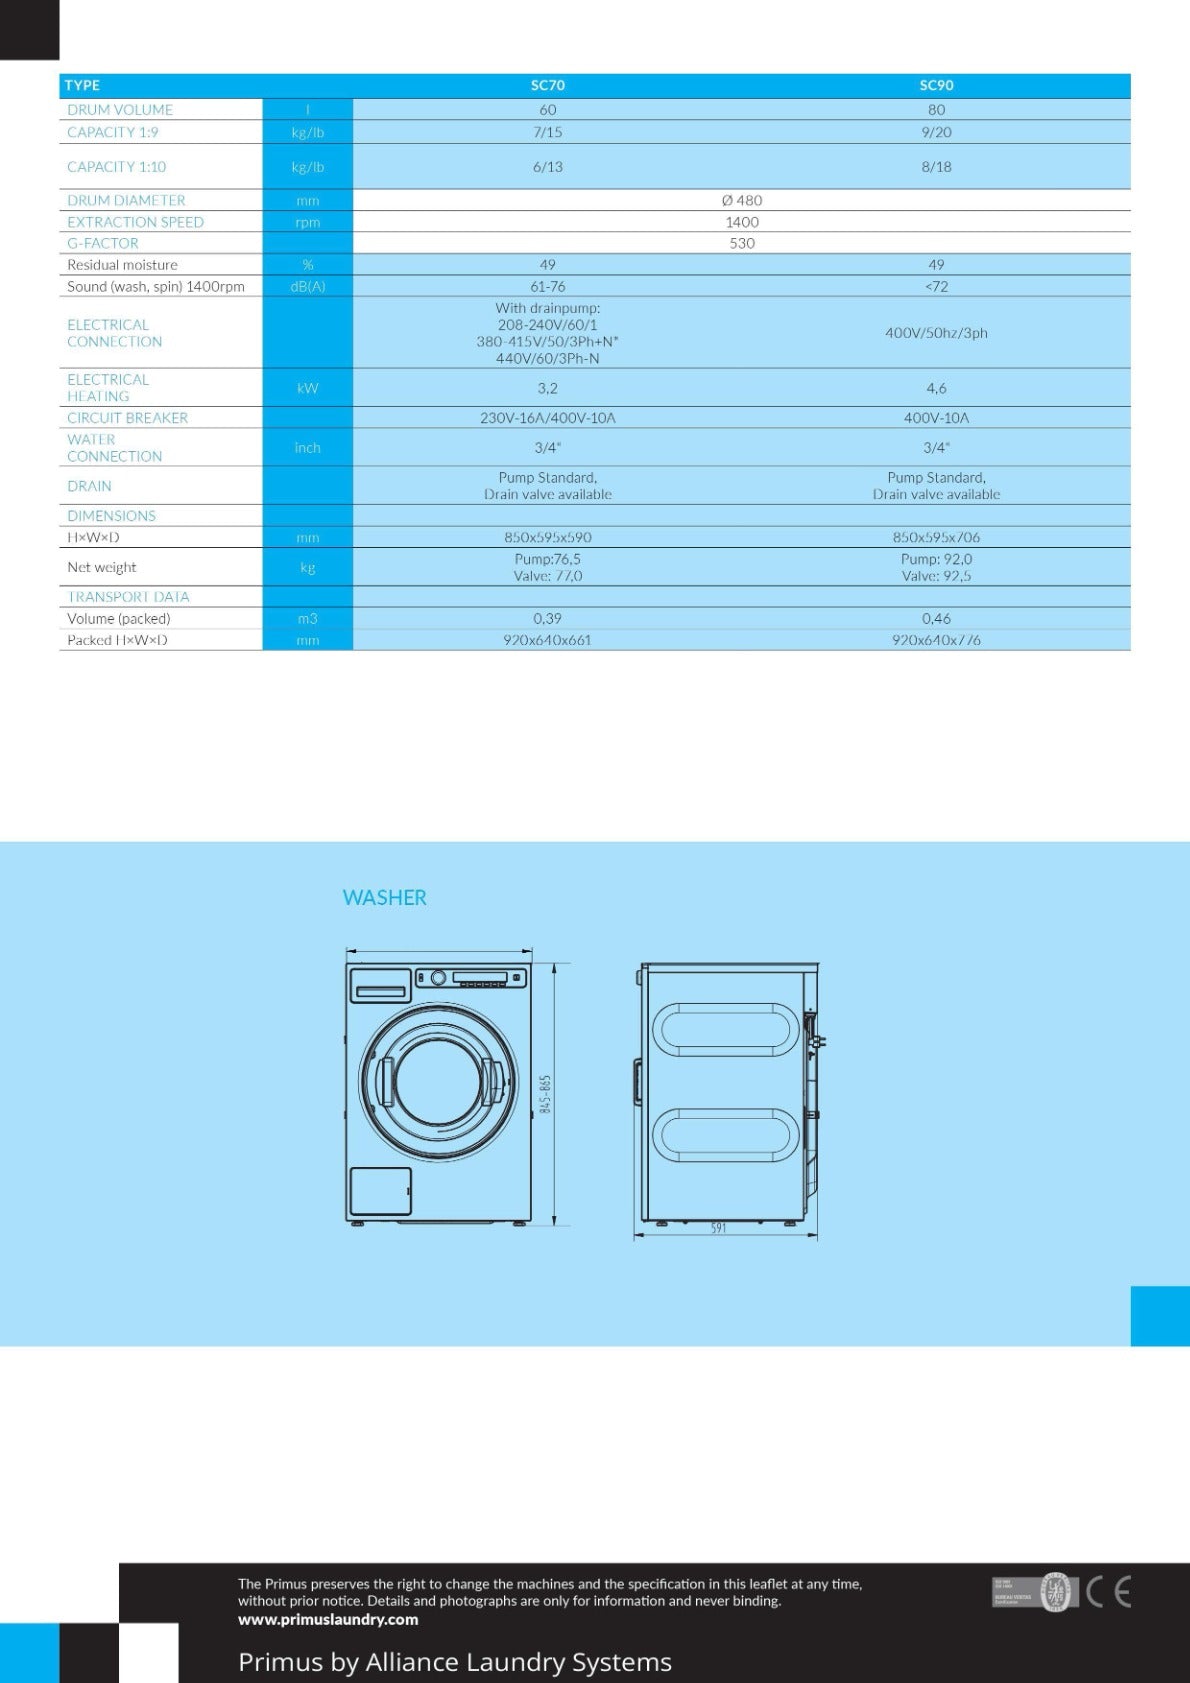 Thumbnail - Primus DAM7HP - Compact Dryer